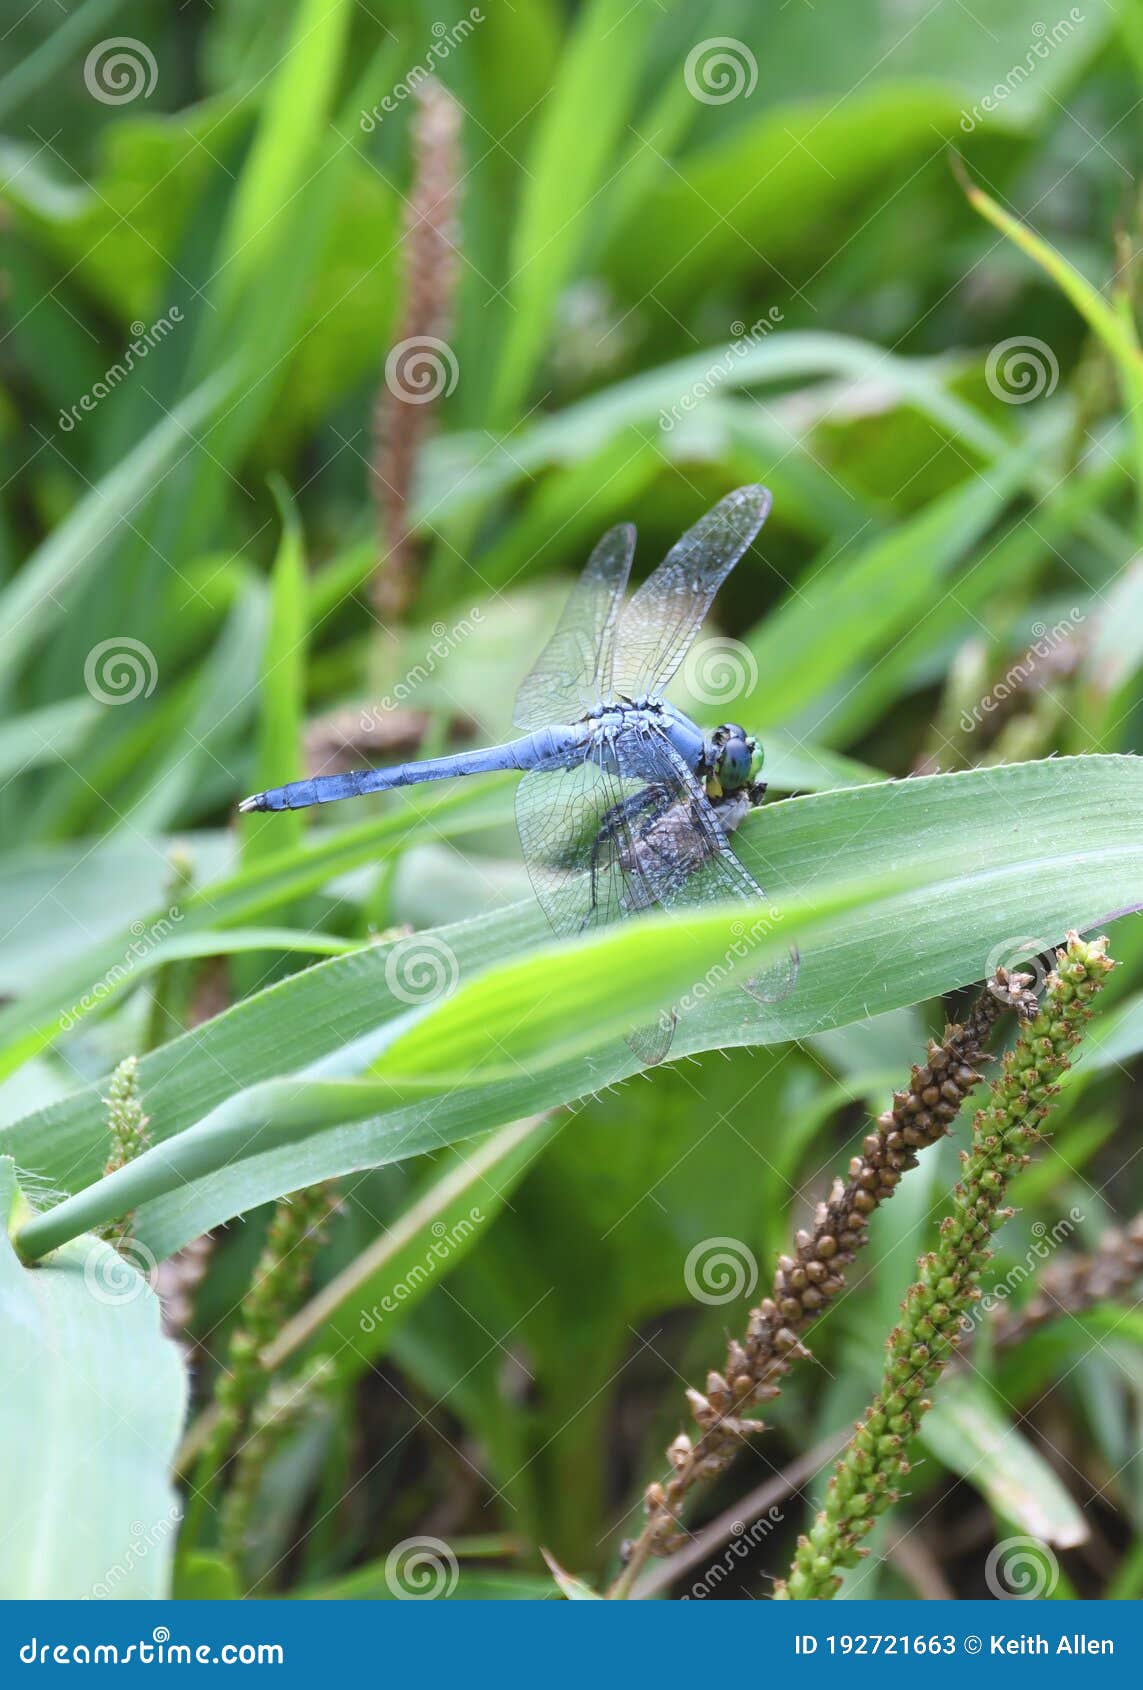 a male slaty skimmer dragonfly feasts on an annual cicada